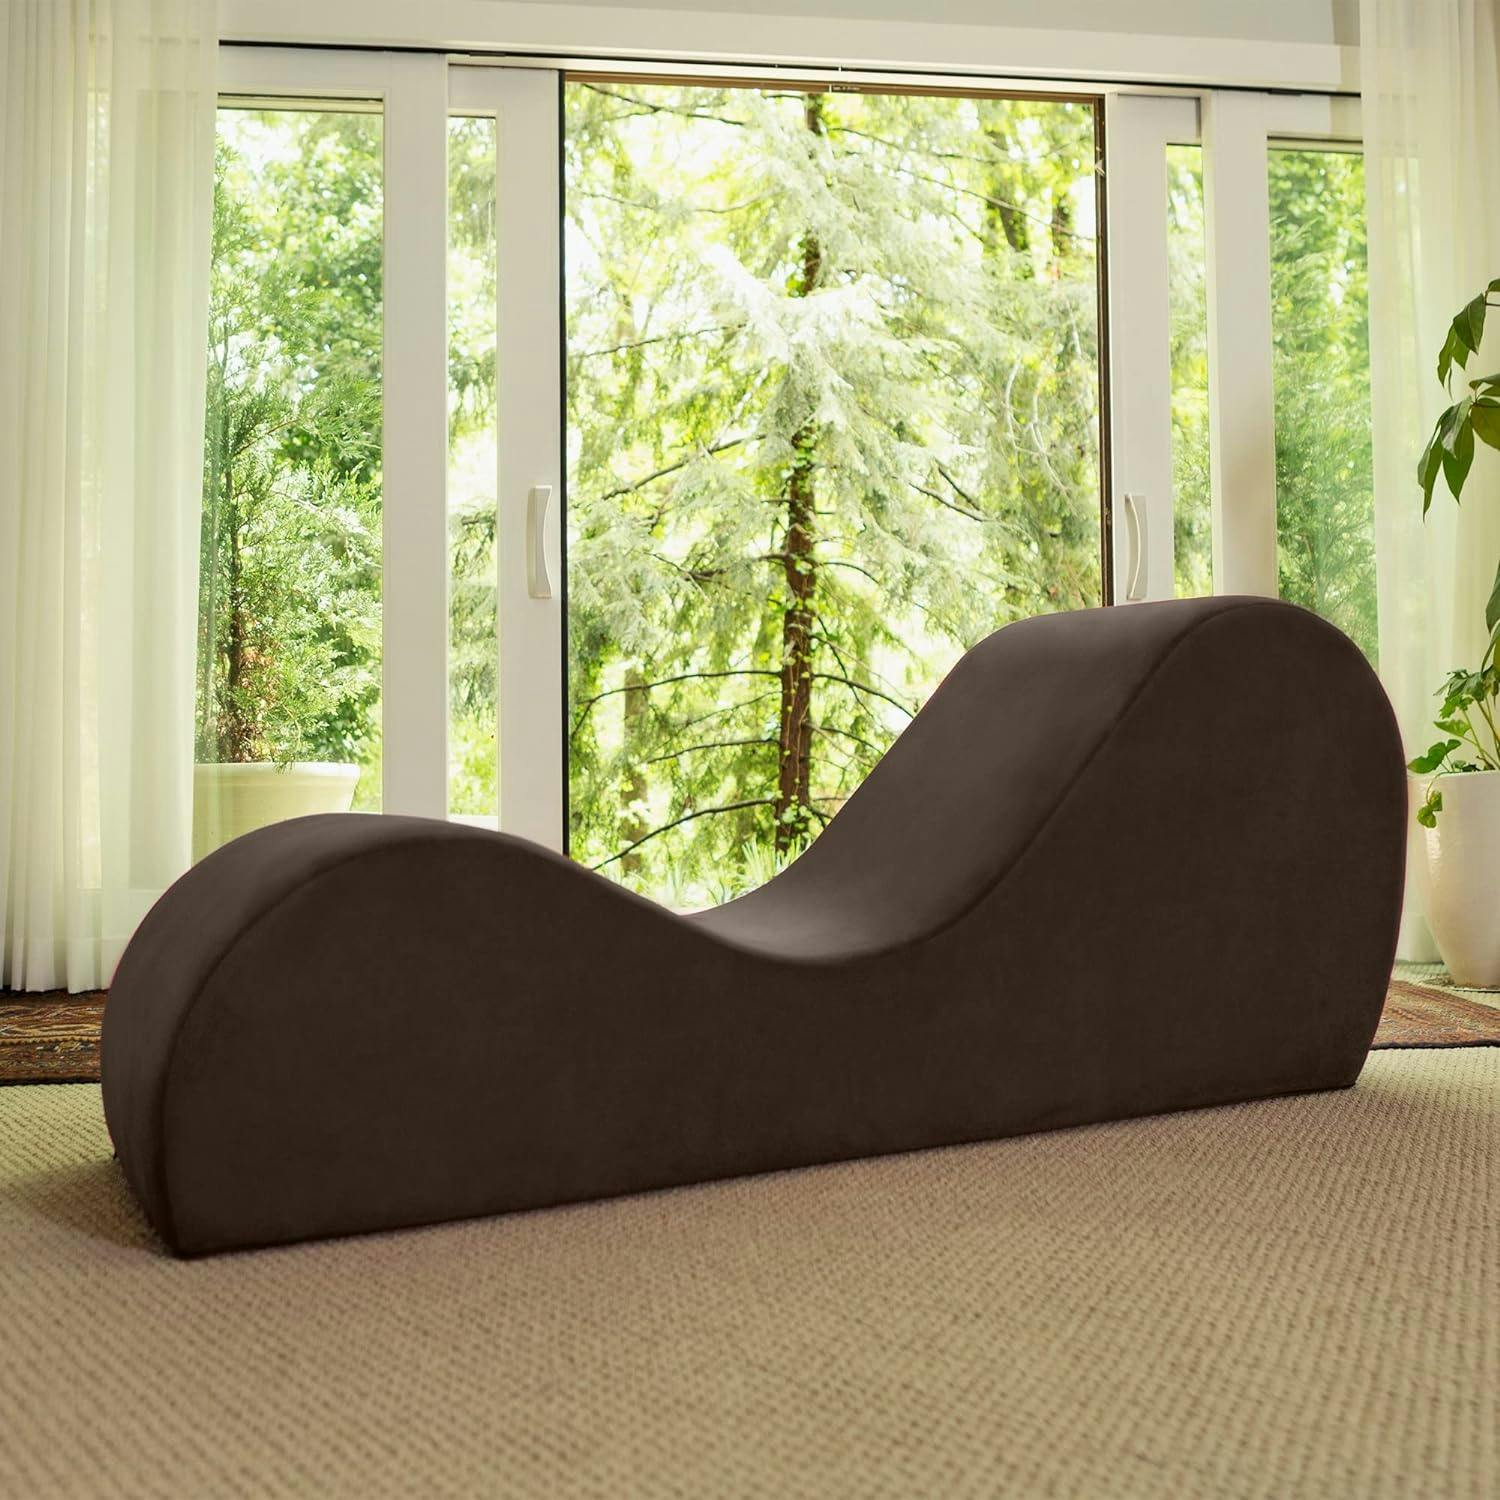 Avana Chic Brown Velvet Yoga Chaise Lounge, 60" Modern Relaxation Chair